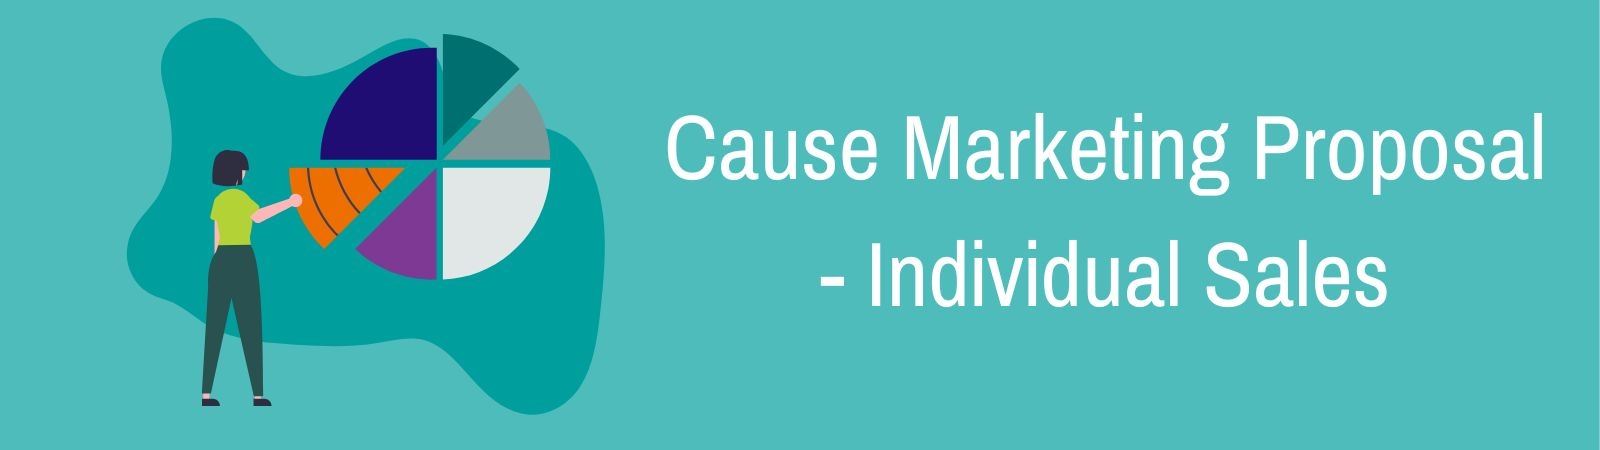 Cause Marketing Proposal  - Individual Sales